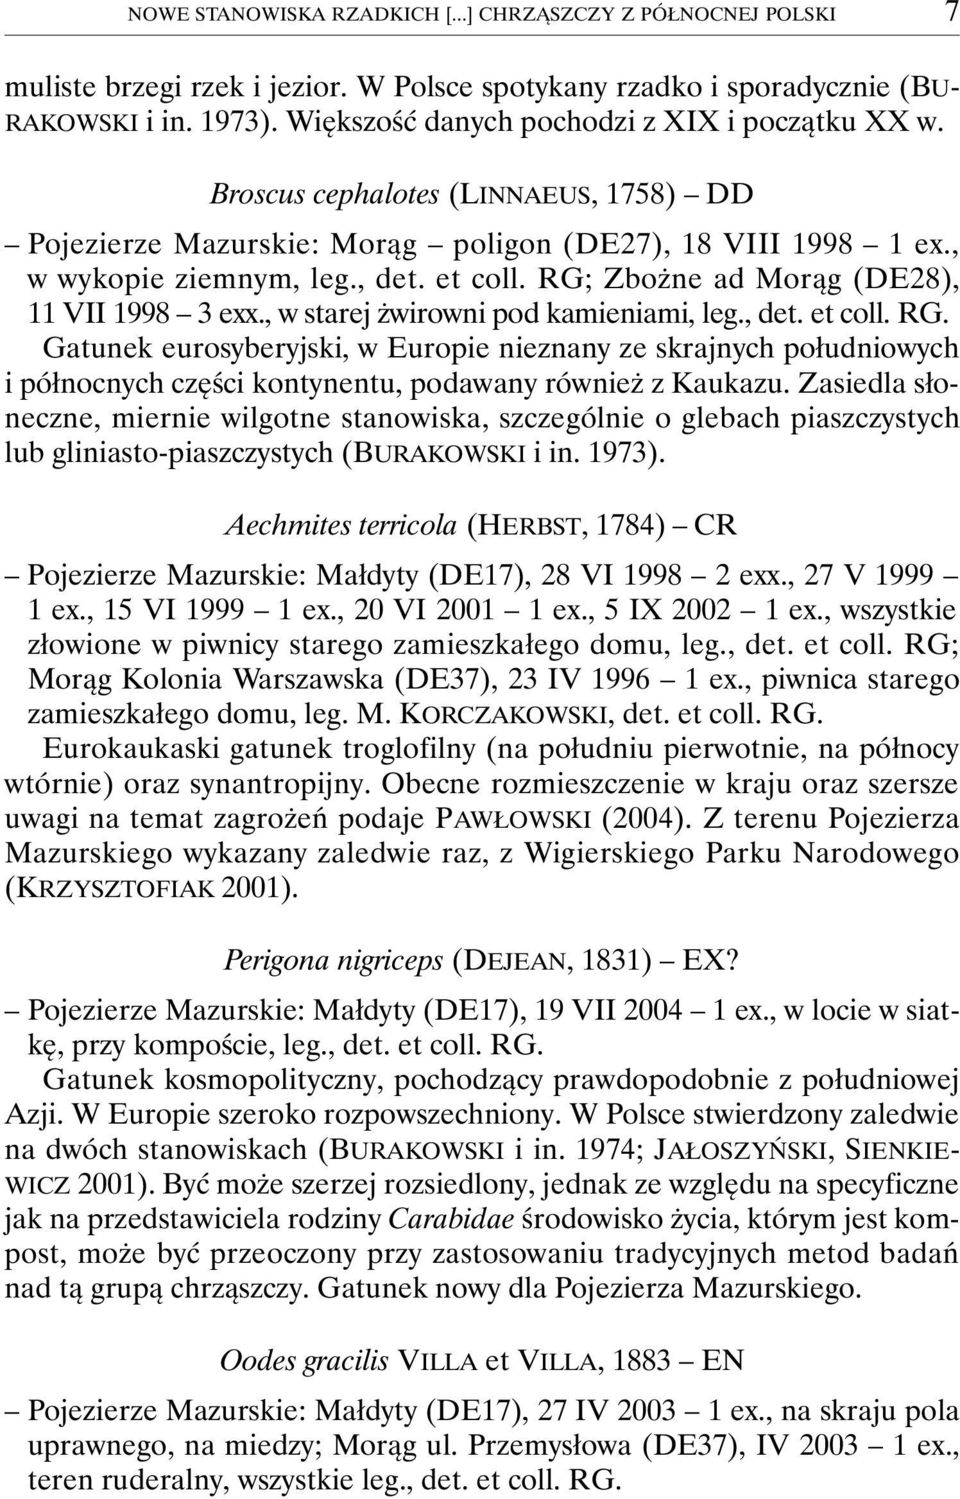 RG; Zbożne ad Morąg (DE28), 11 VII 1998 3 exx., w starej żwirowni pod kamieniami, leg., det. et coll. RG.